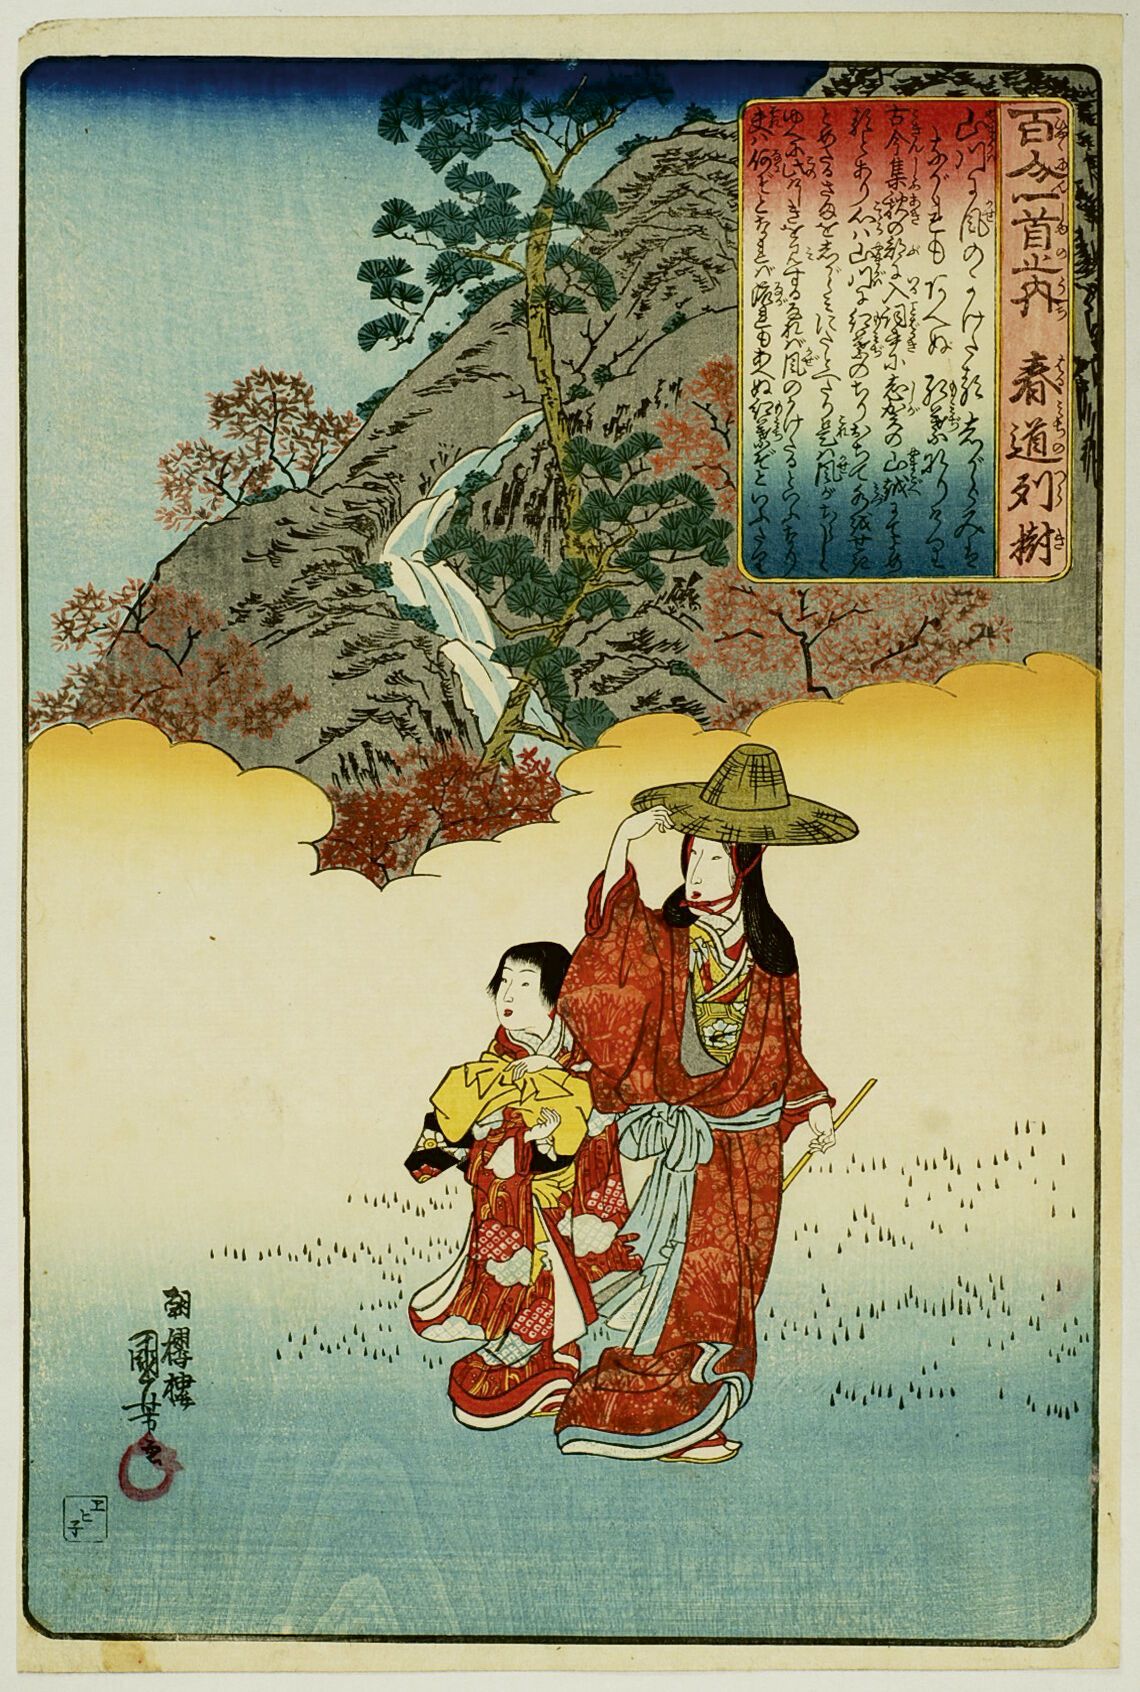 Null 宇都宫邦彦 (1797-1861)
百人一首》系列中的 "Oban tate-e"，板块为 "Harumichi no Tsuraki"，在瀑布前朝圣&hellip;